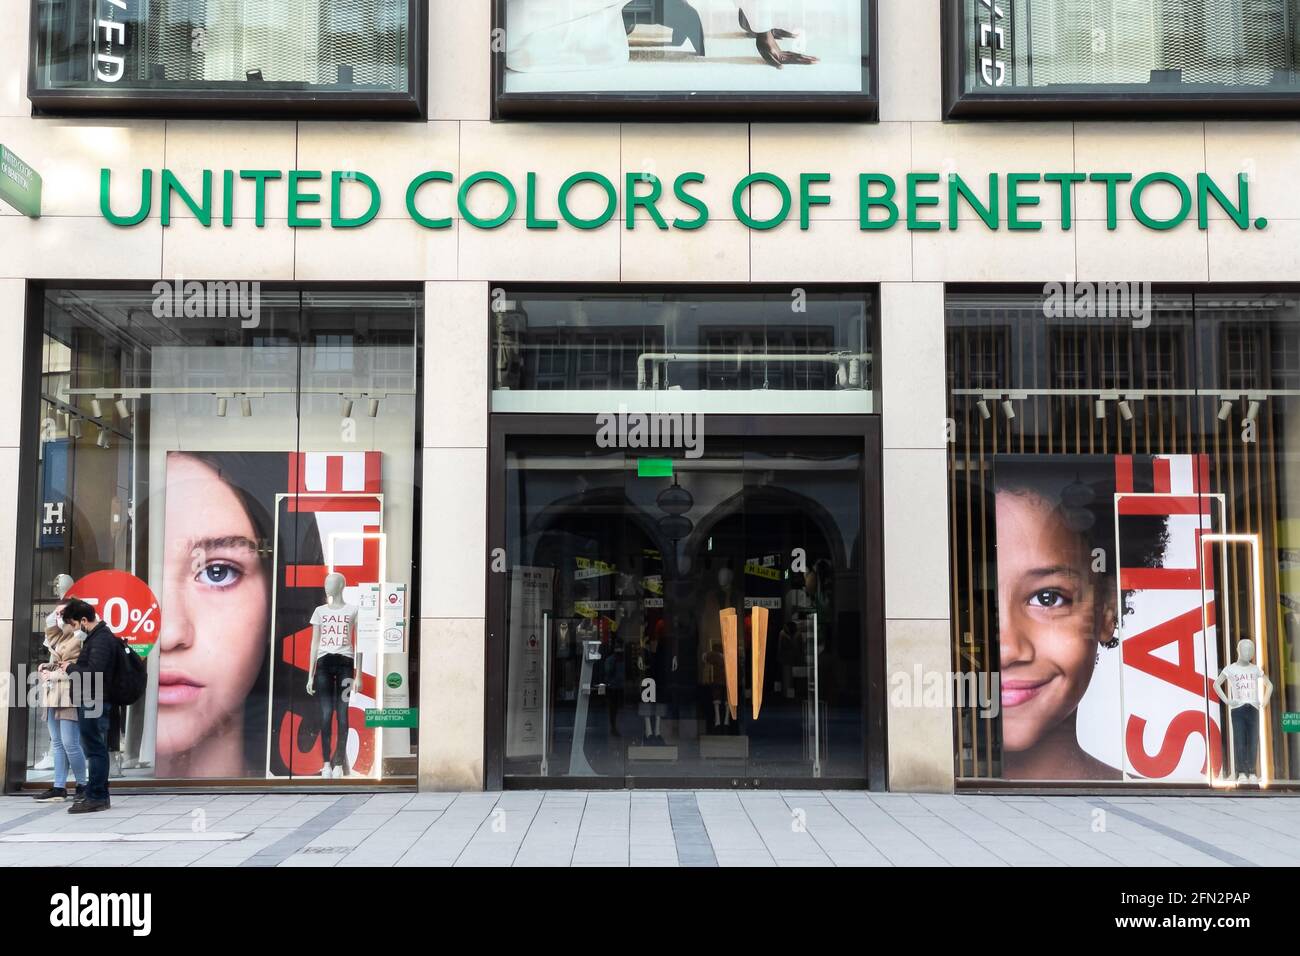 United Colors of Benetton sore in Munich Stock Photo